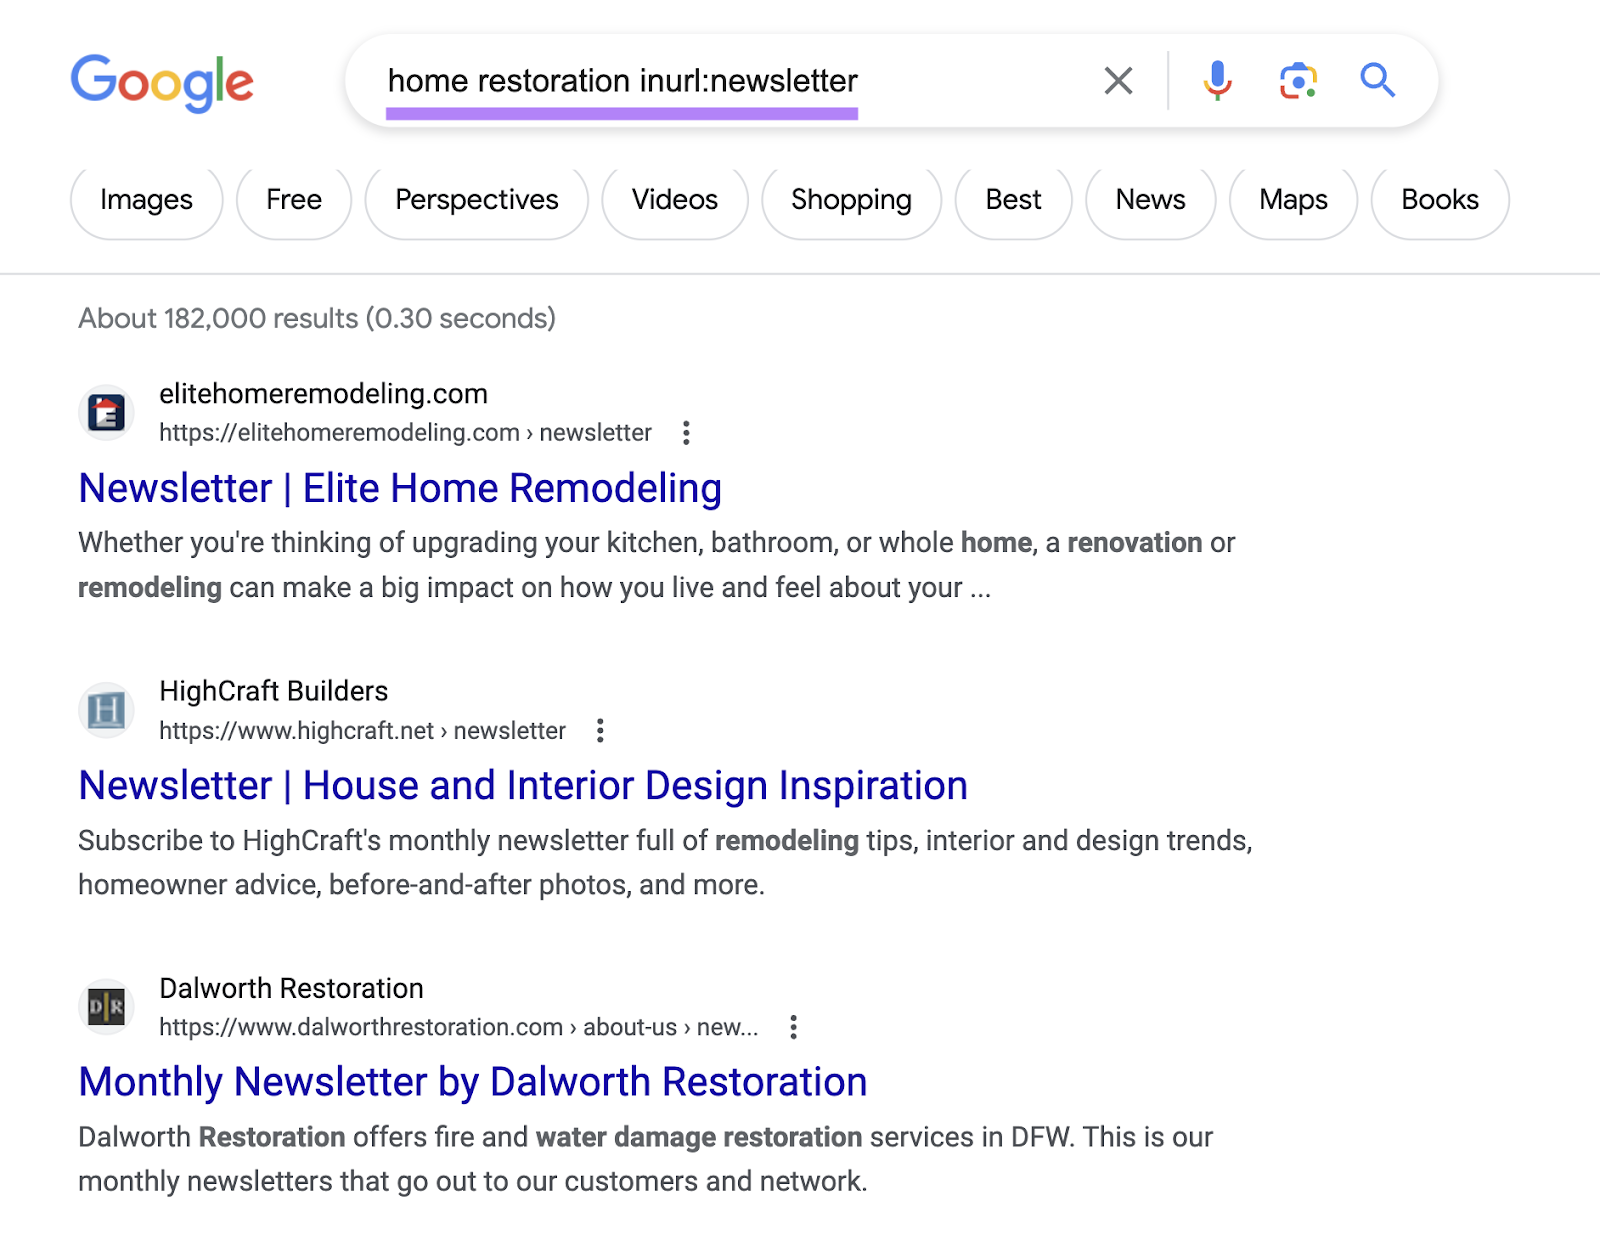 Google SERP for "home restoration inurl:newsletter"